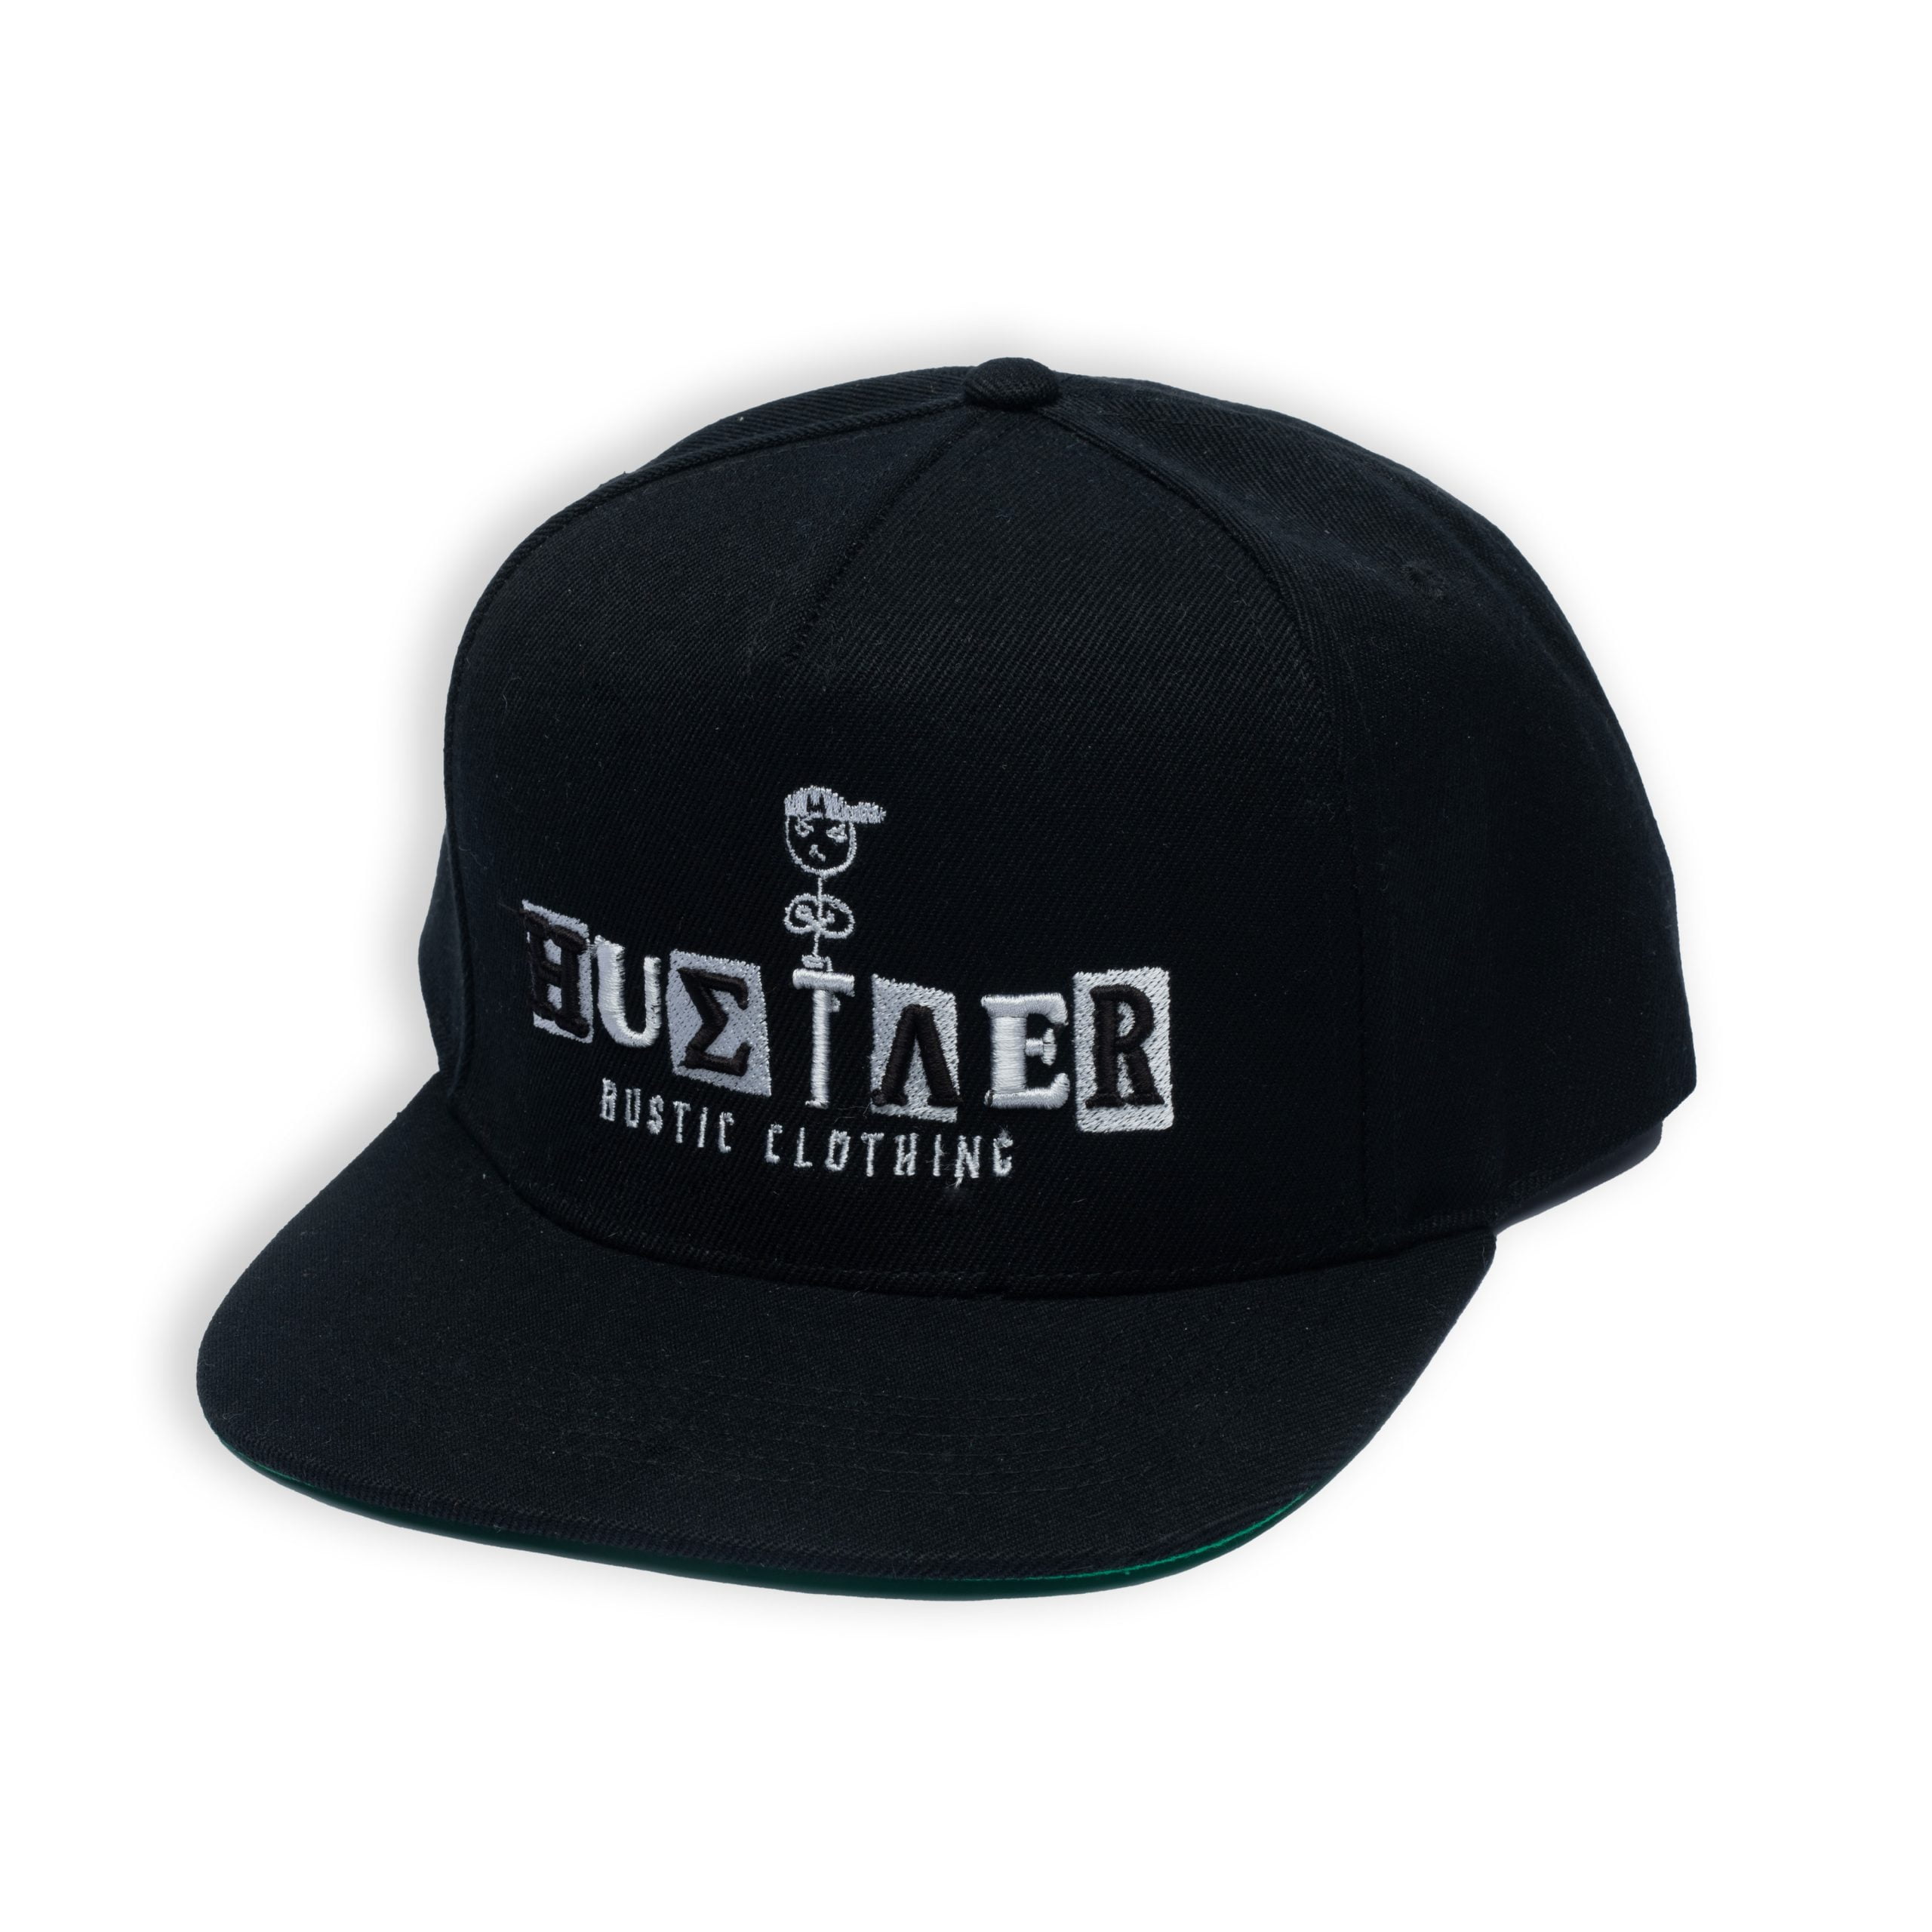 hat black logo